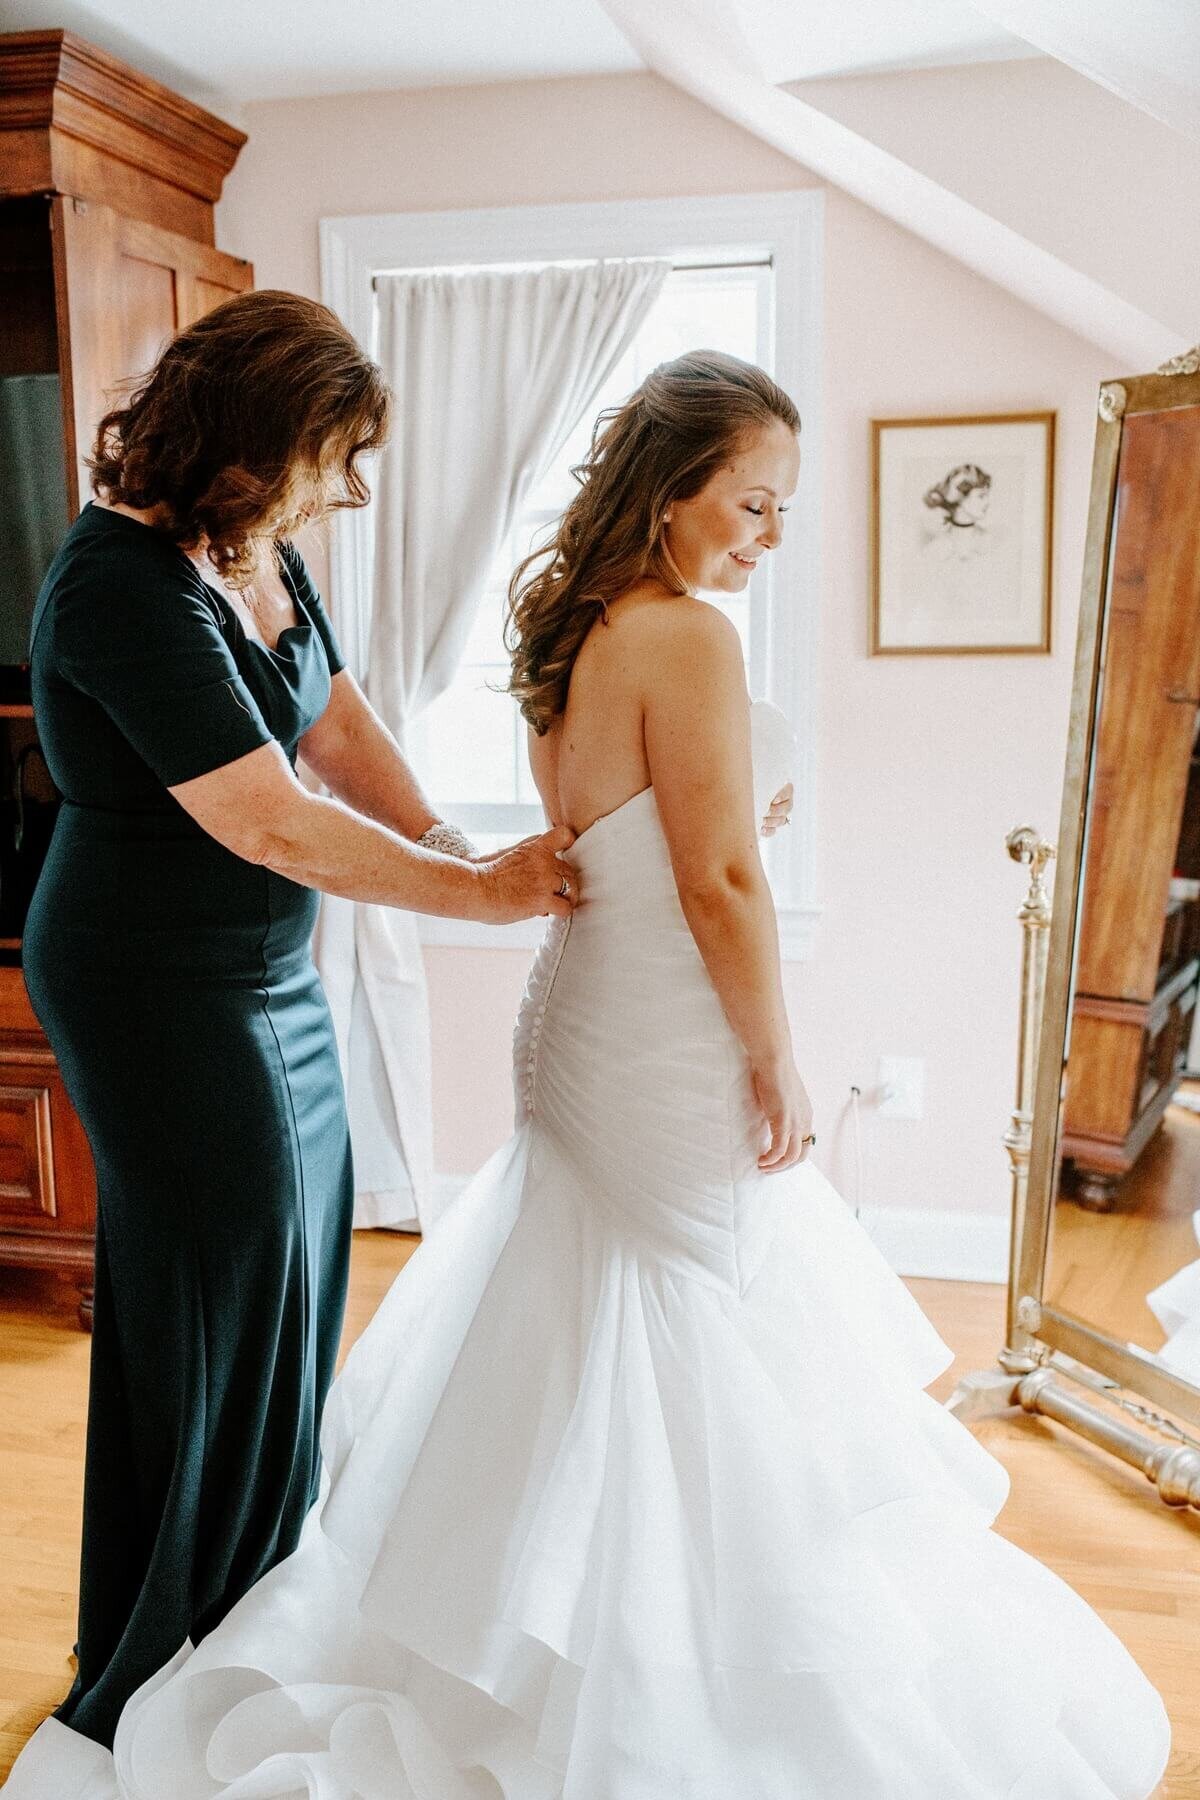 1-kara-loryn-photography-mother-helping-bride-with-wedding-dress